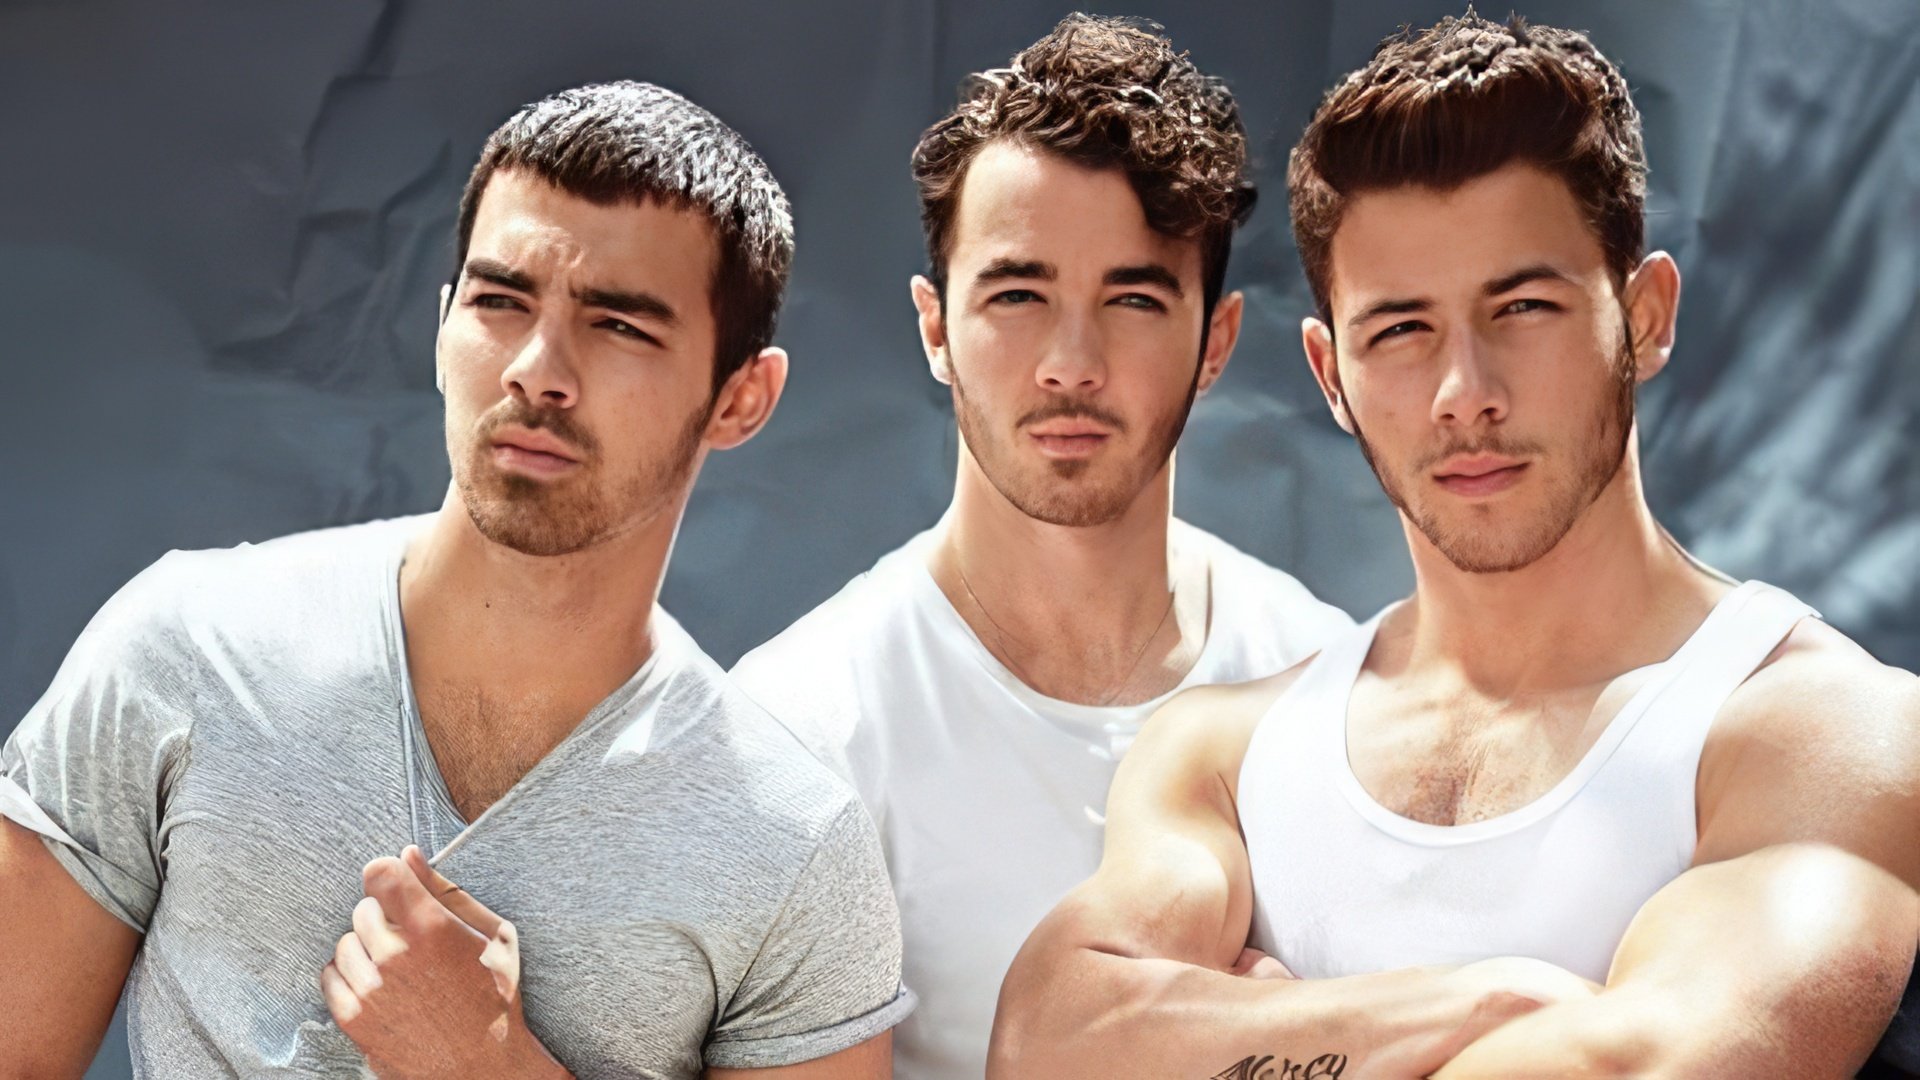 Nick Jonas and his brothers as the Jonas Brothers band